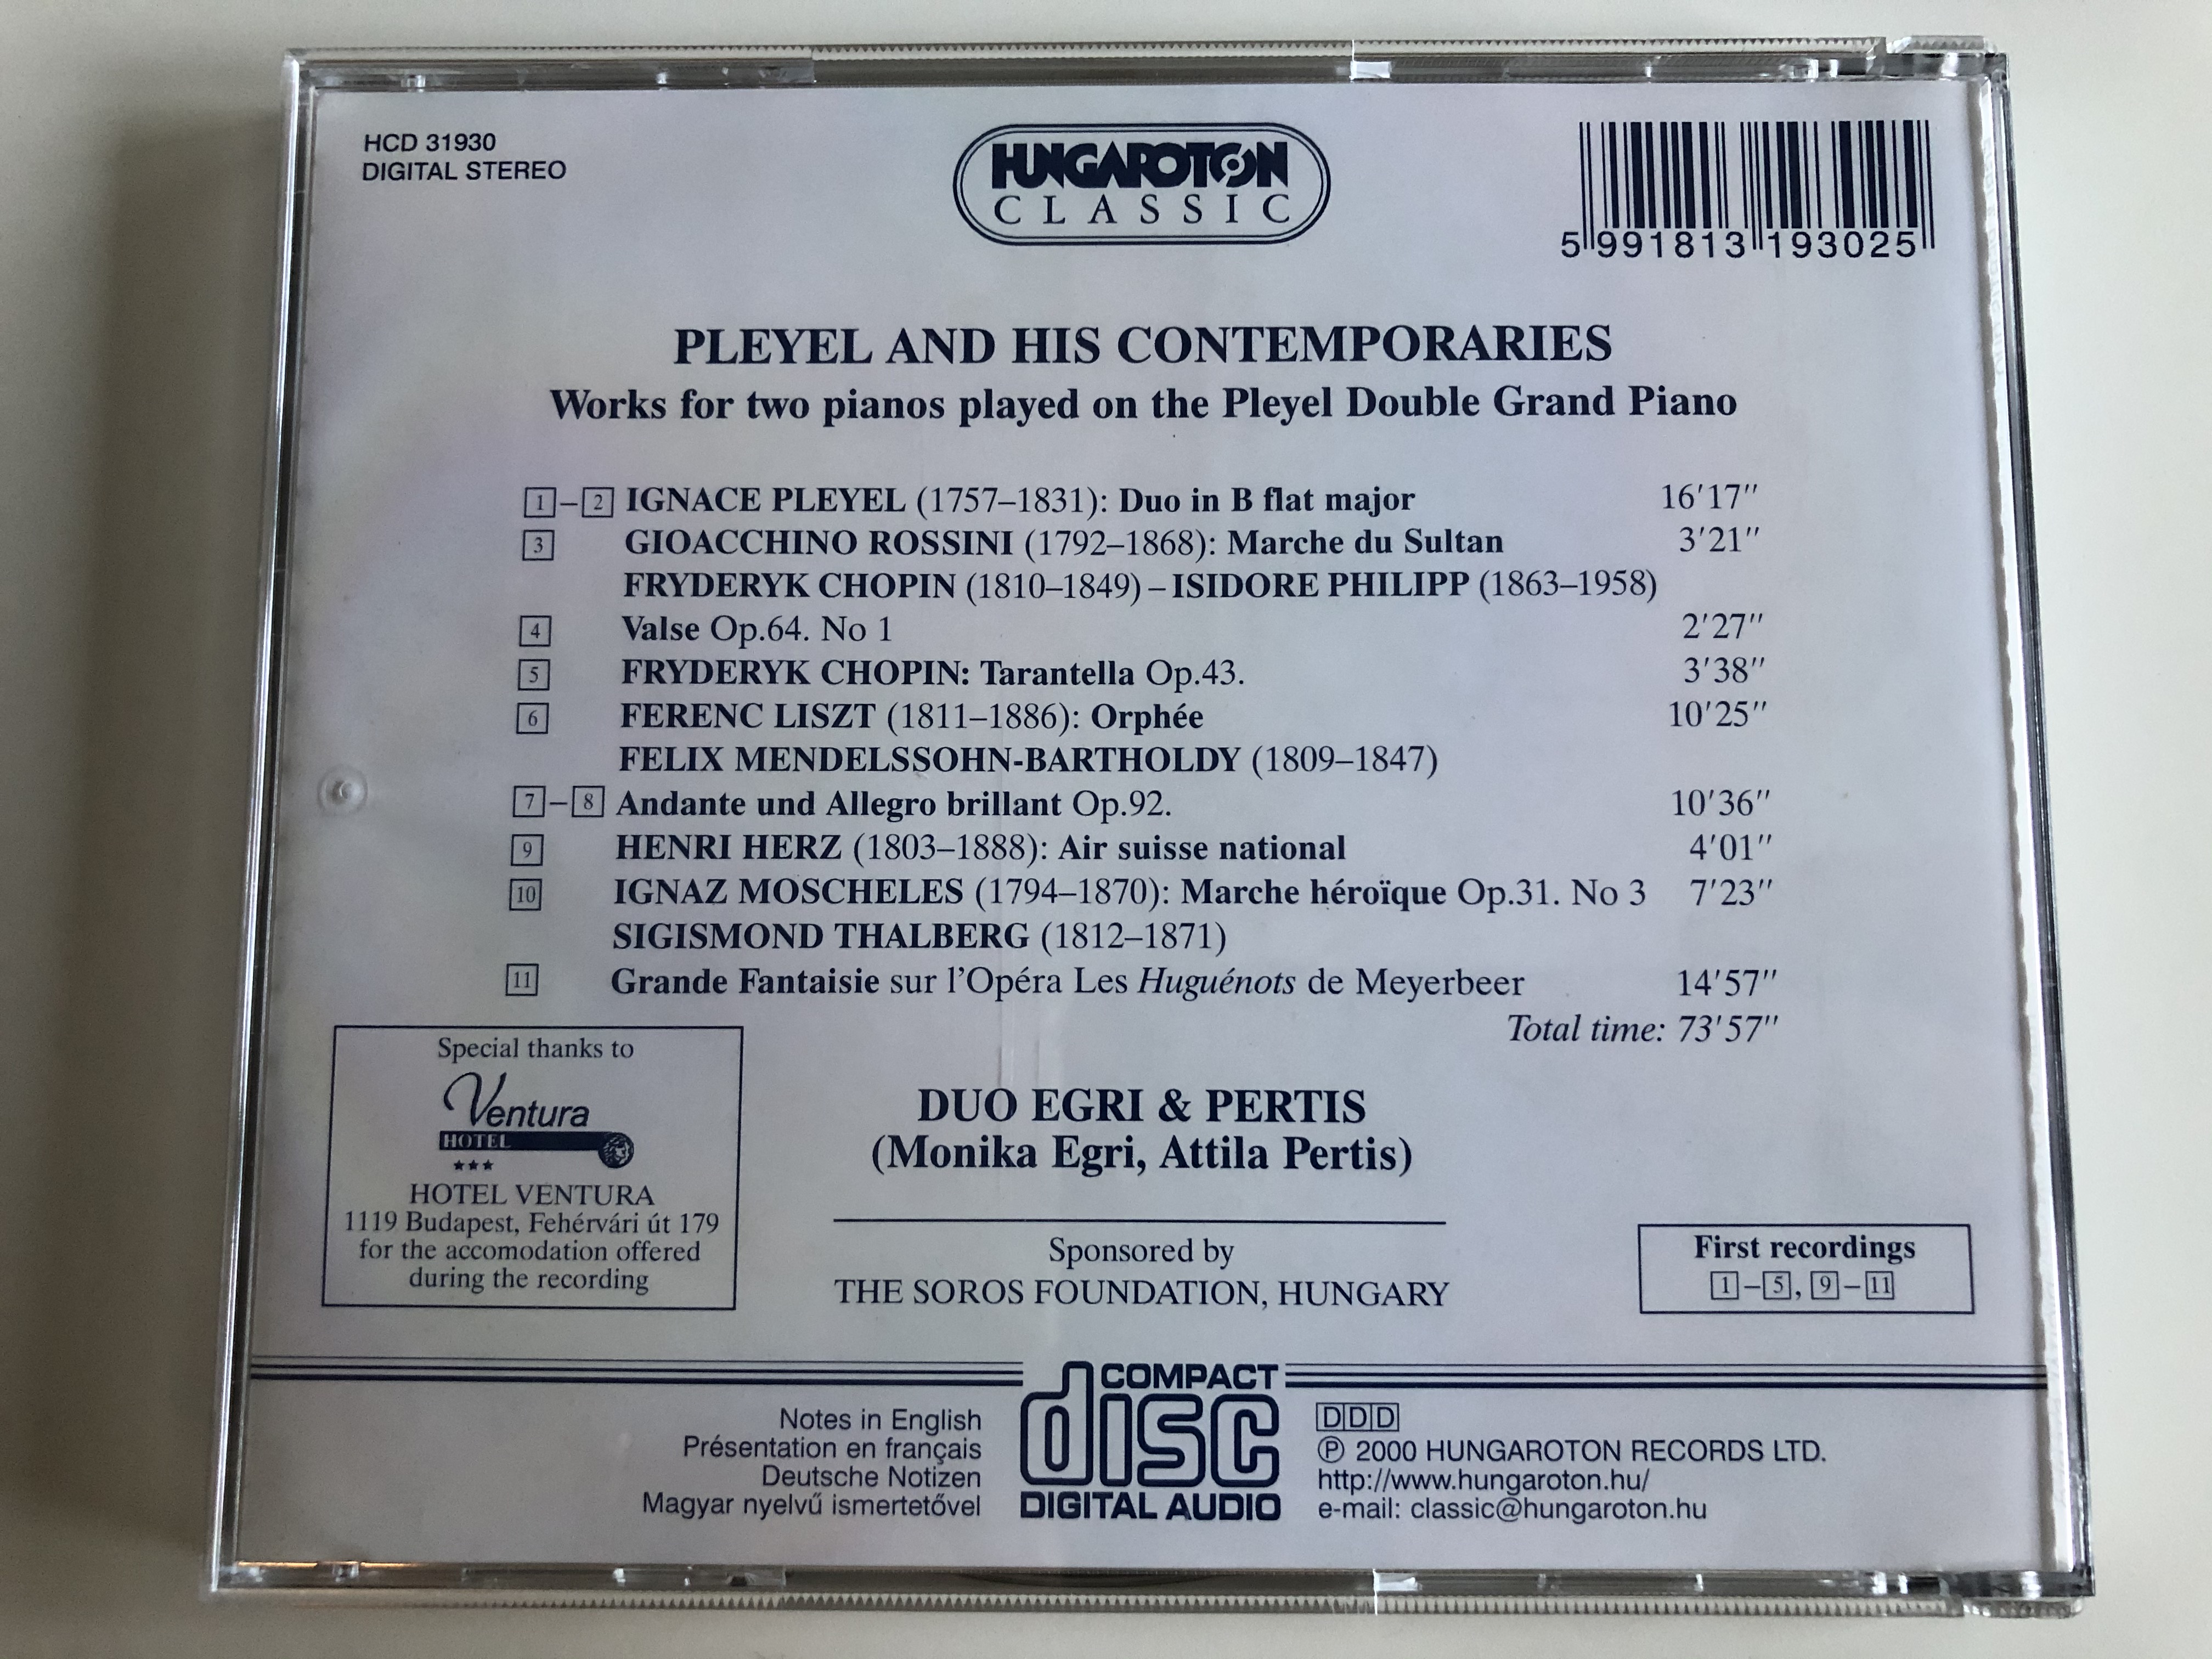 pleyel-contemporaries-rossini-chopin-liszt-moscheles-herz-medelssohn-thalberg-duo-egri-pertis-on-the-pleyel-double-grand-piano-hungaroton-classic-audio-cd-2000-stereo-hcd-31930-9-.jpg